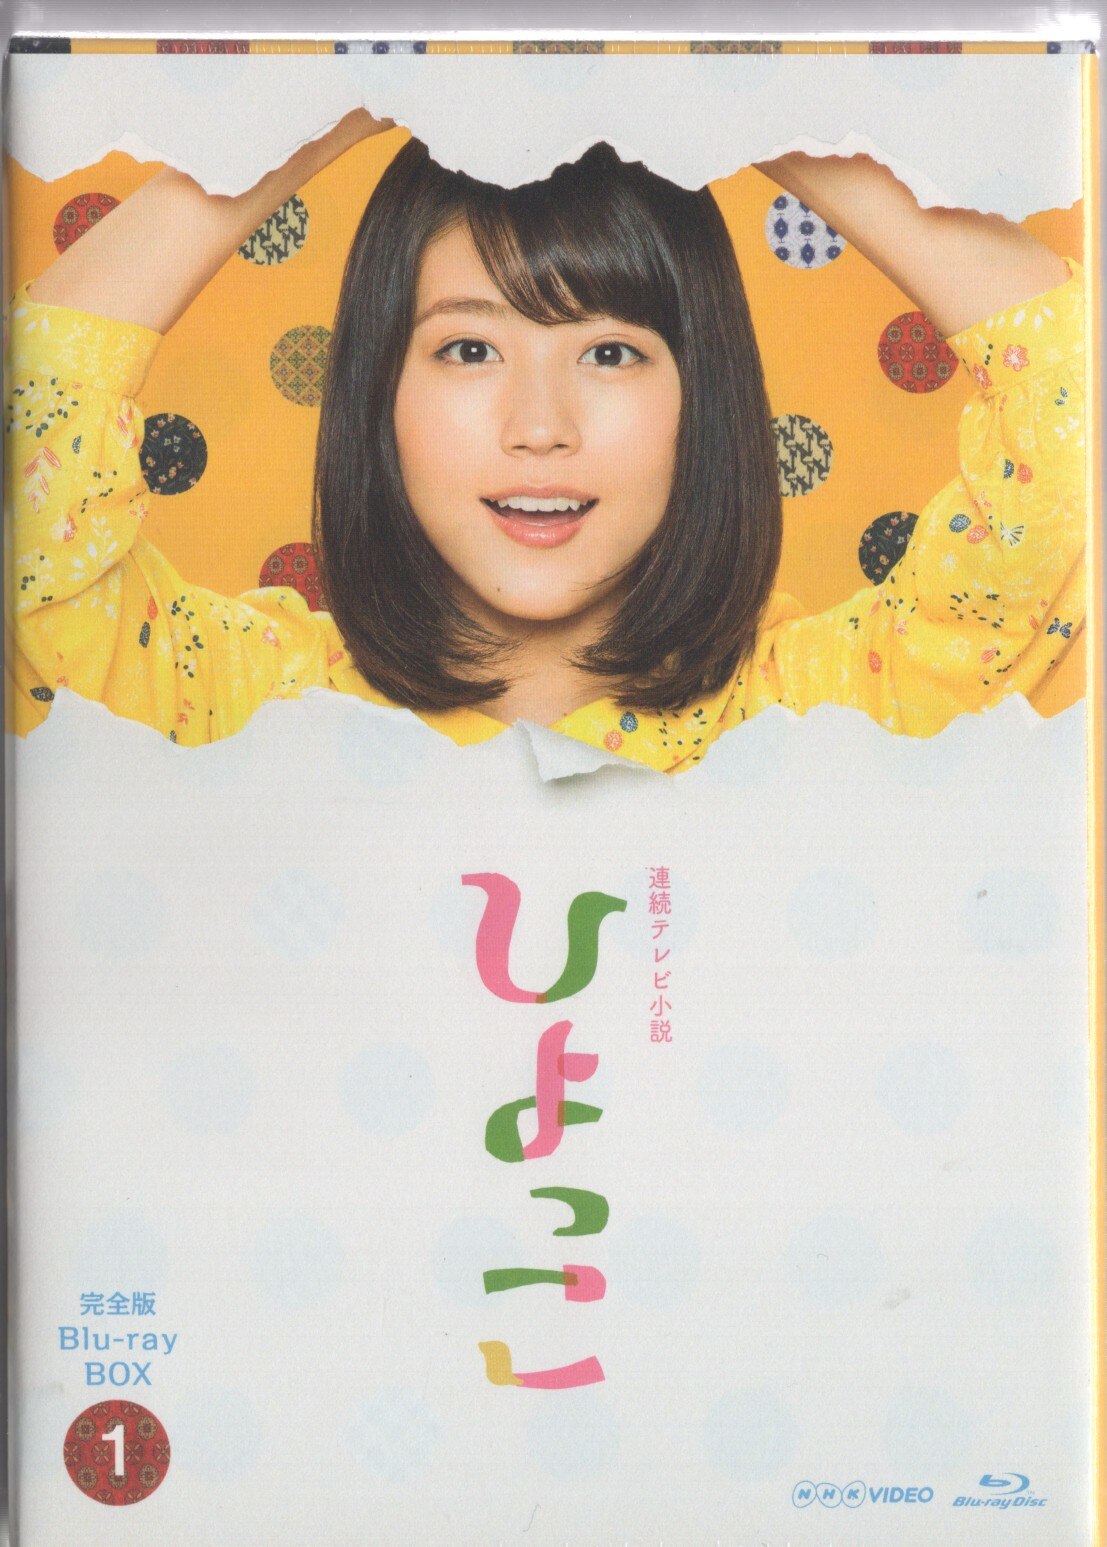 NHK 「あまちゃん」 完全版 Blu-rayBOX 全3巻 ブルーレイ美品です即日発送致します